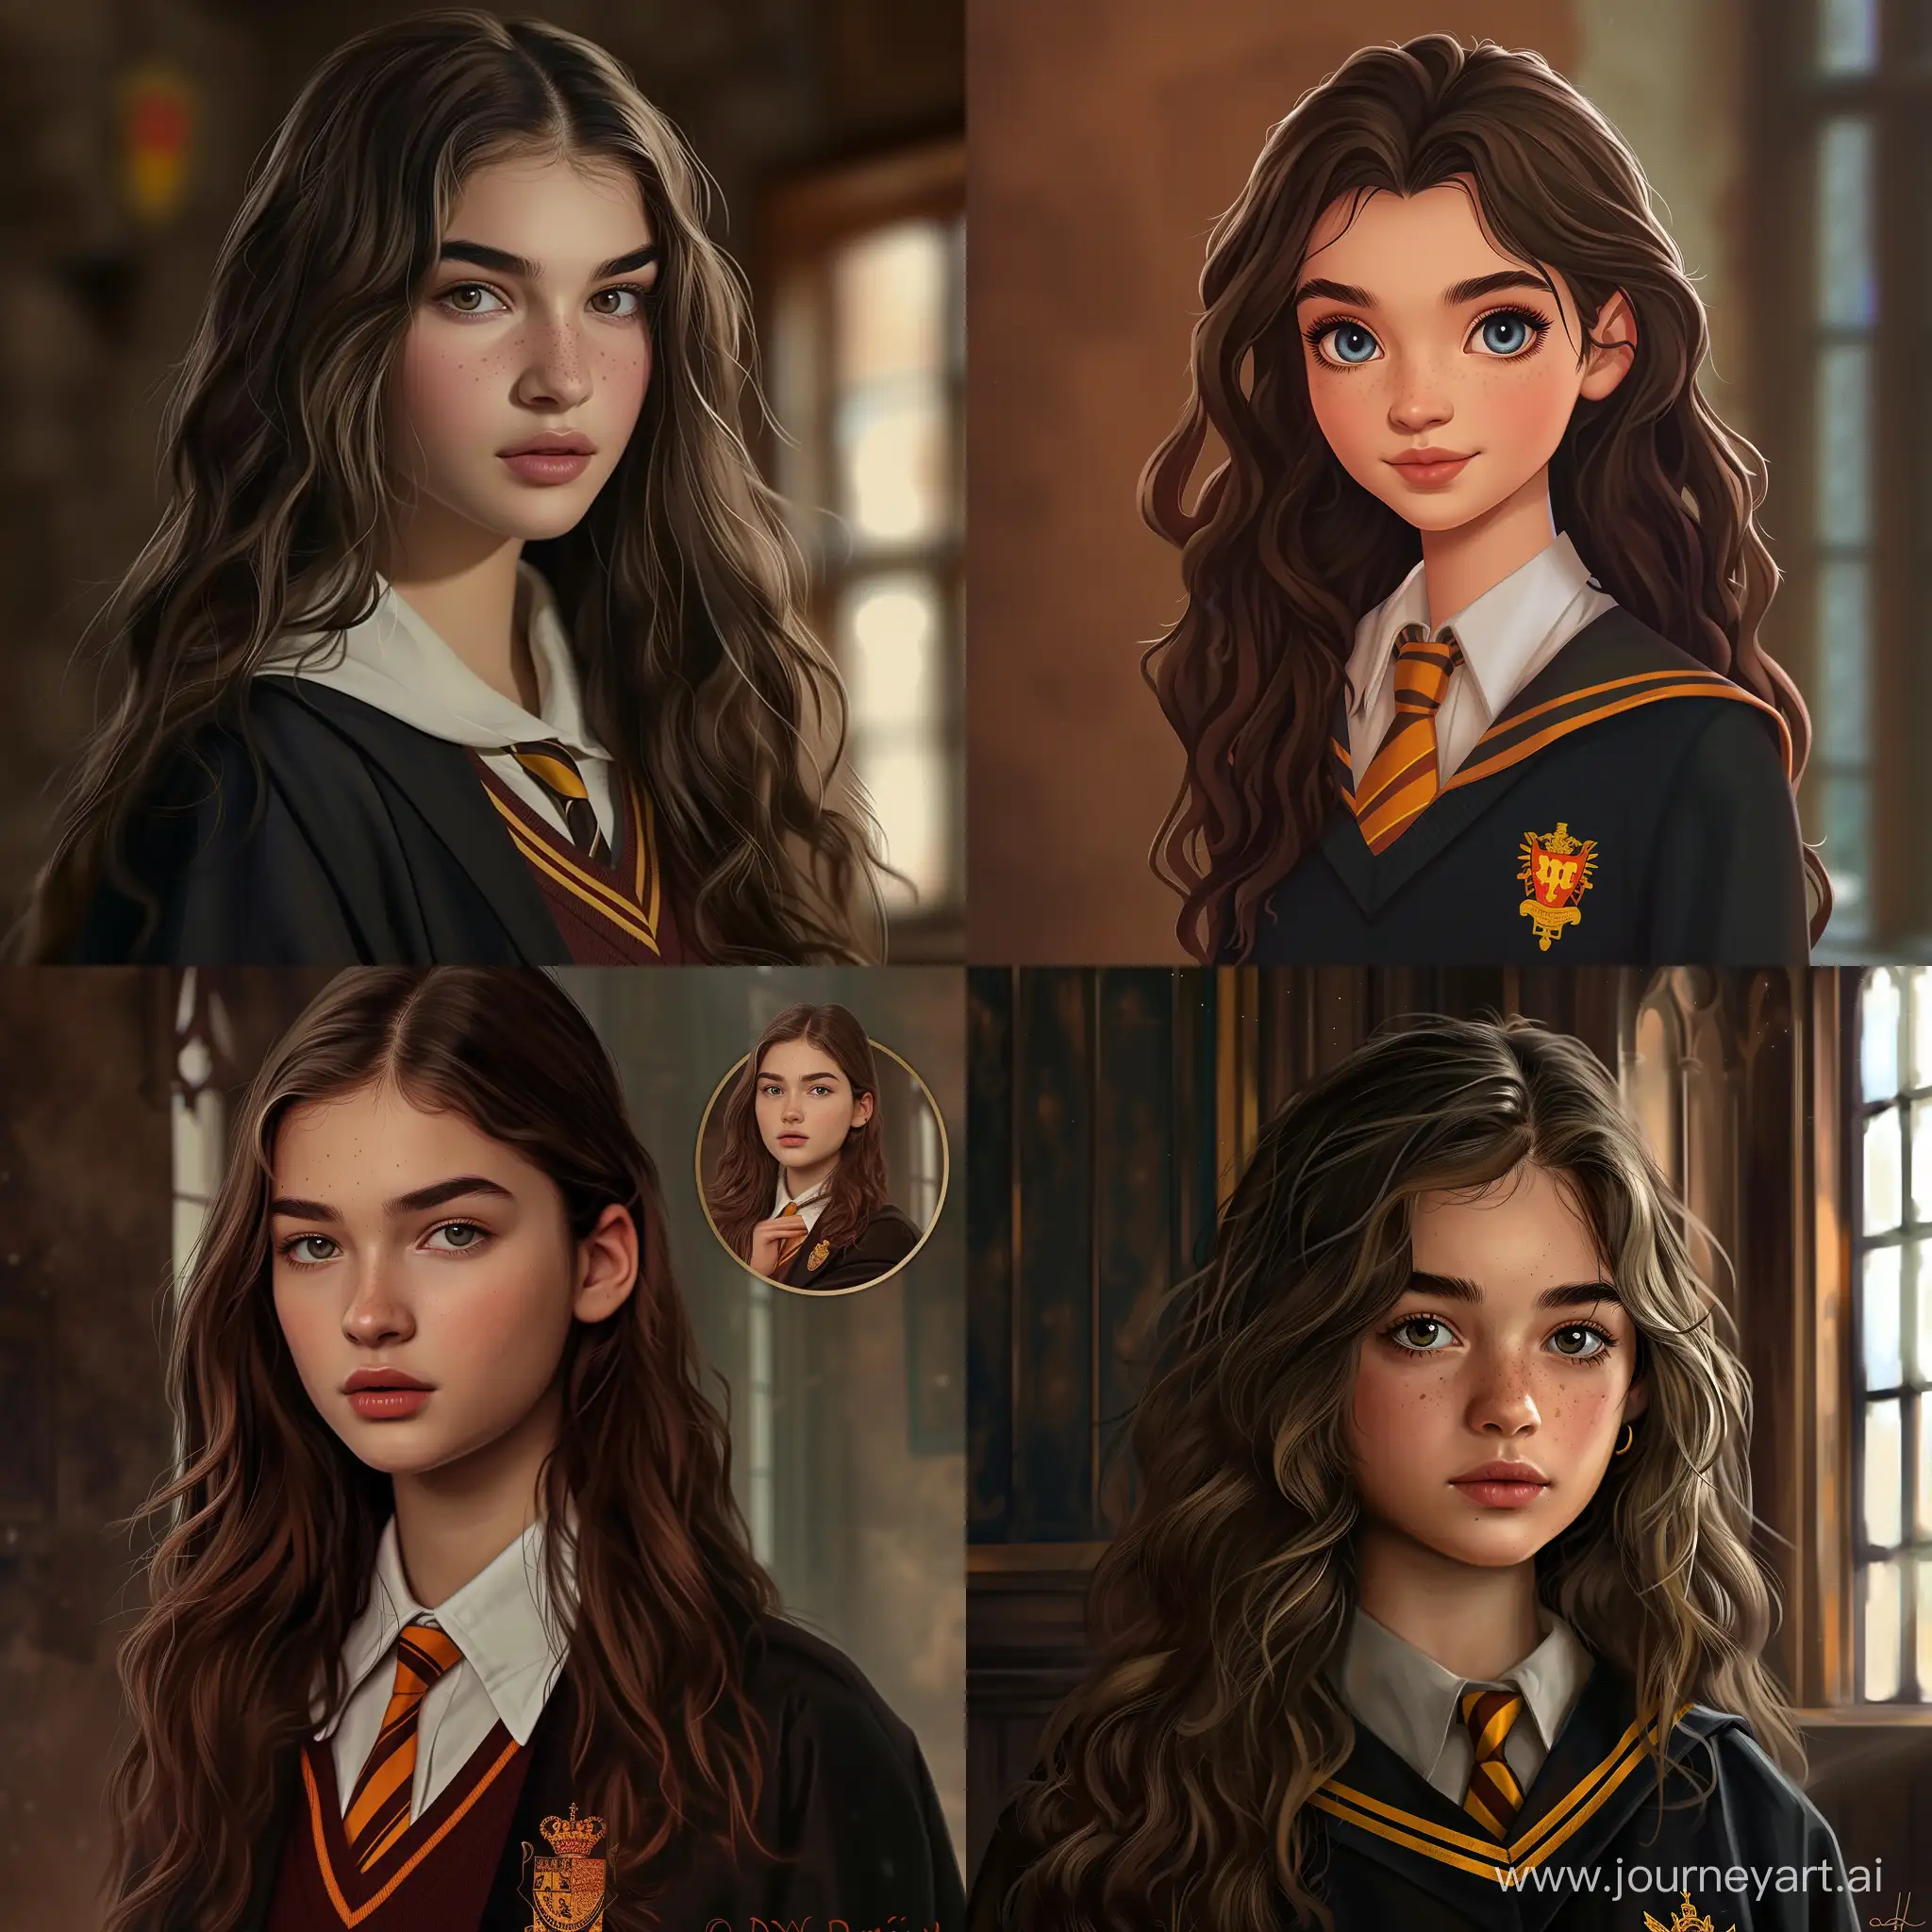 Odeya Rush, teenager, 15 years old, Hogwarts student, Ravenclaw, high quality, high detail, cartoon art